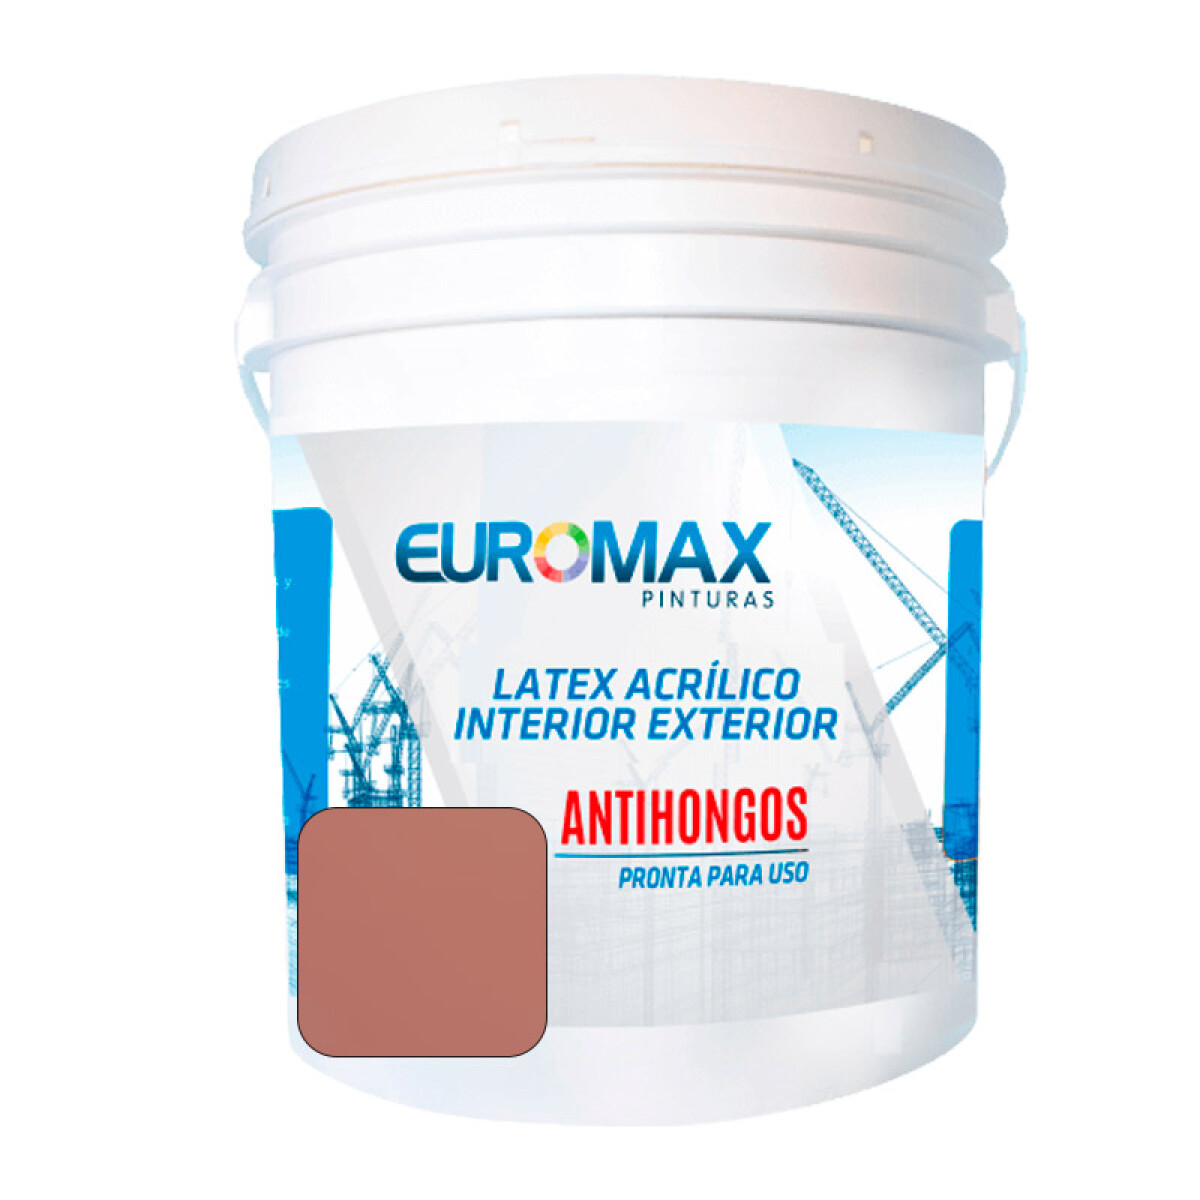 Euromax Latex Acrílico Interior - Exterior (zona protegida) - Mandarina 